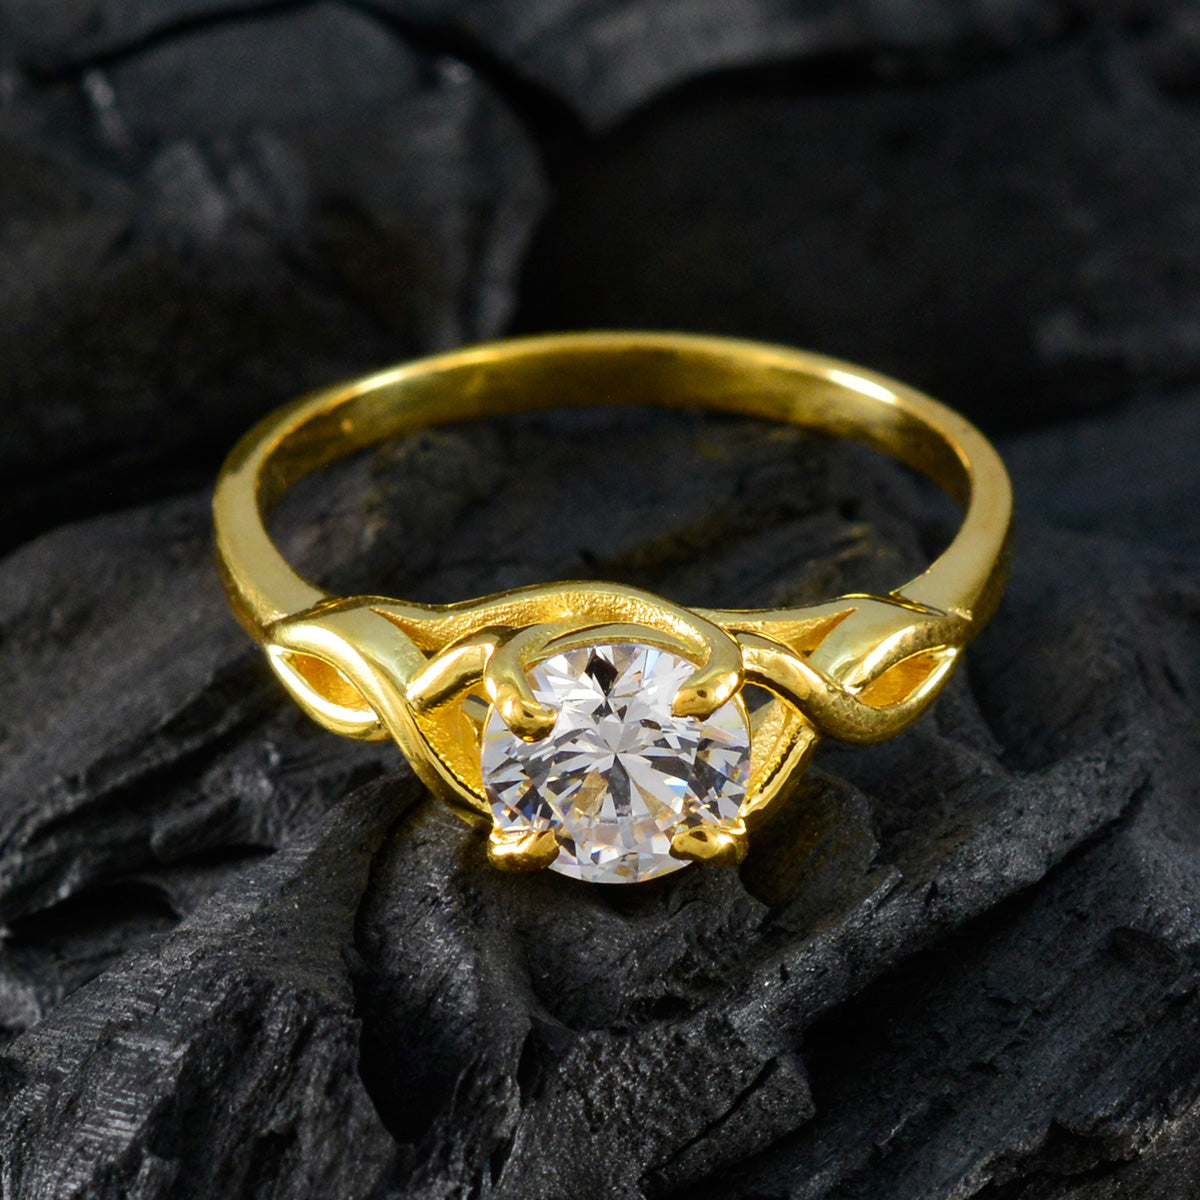 Riyo Gemstone Silver Ring With Yellow Gold Plating White CZ Stone Round Shape Prong Setting Ring